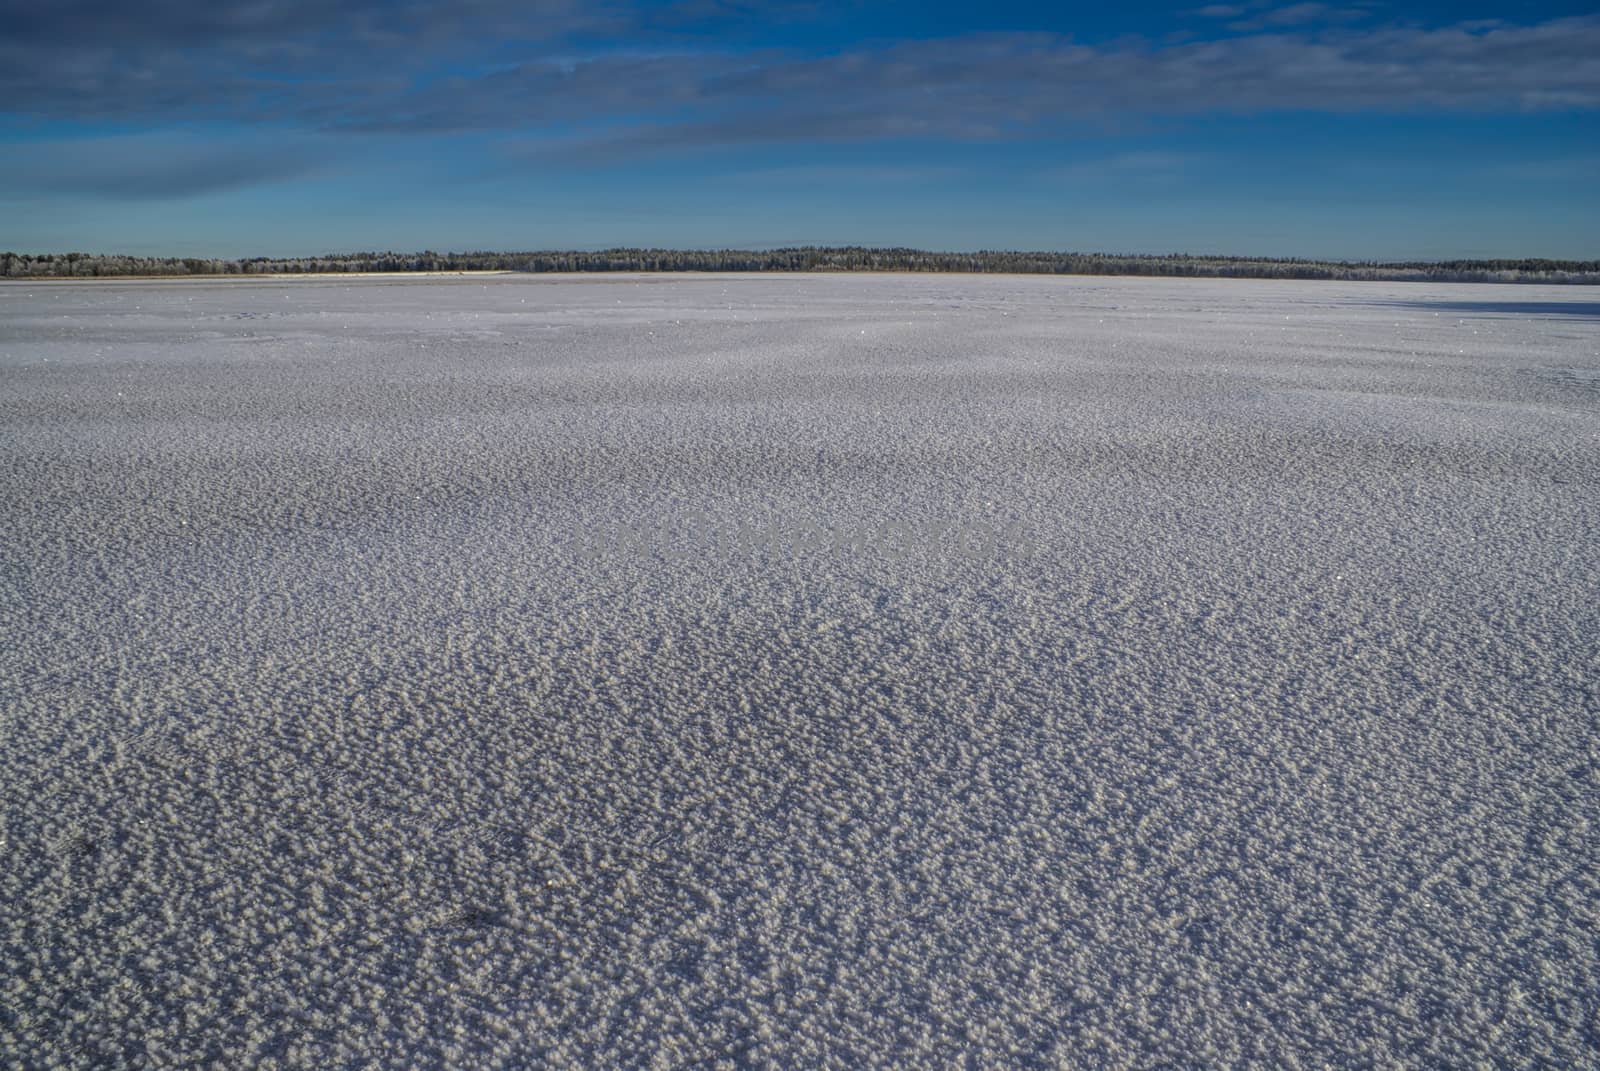 Snowy plain by MichalKnitl